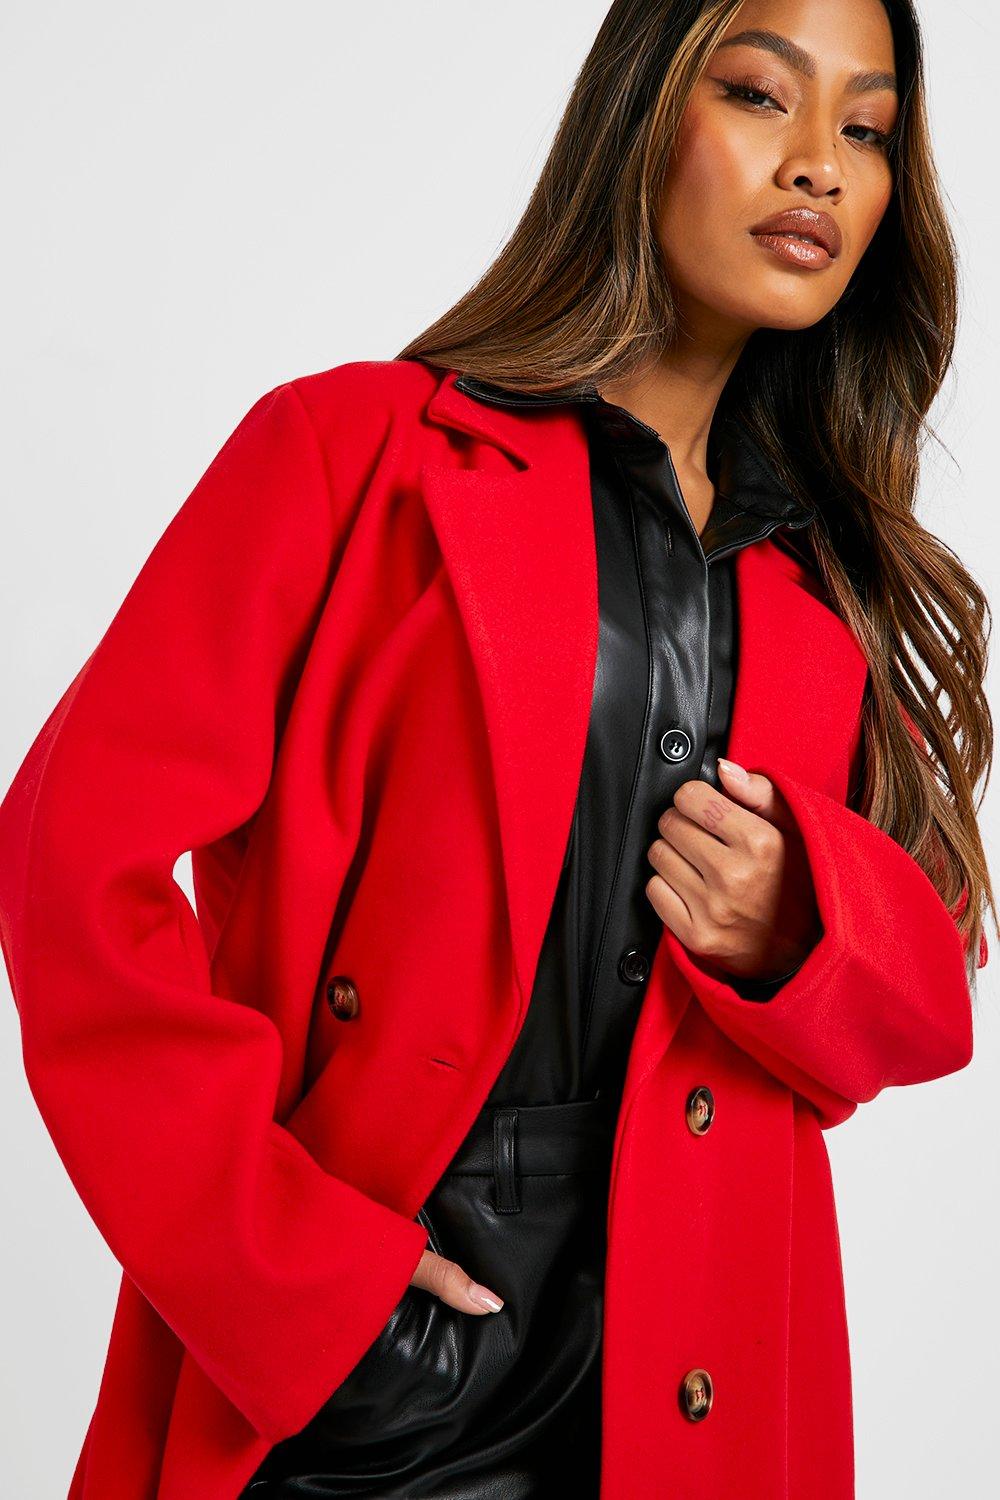 Red wool coat with big hood swing coat 1117# – XiaoLizi